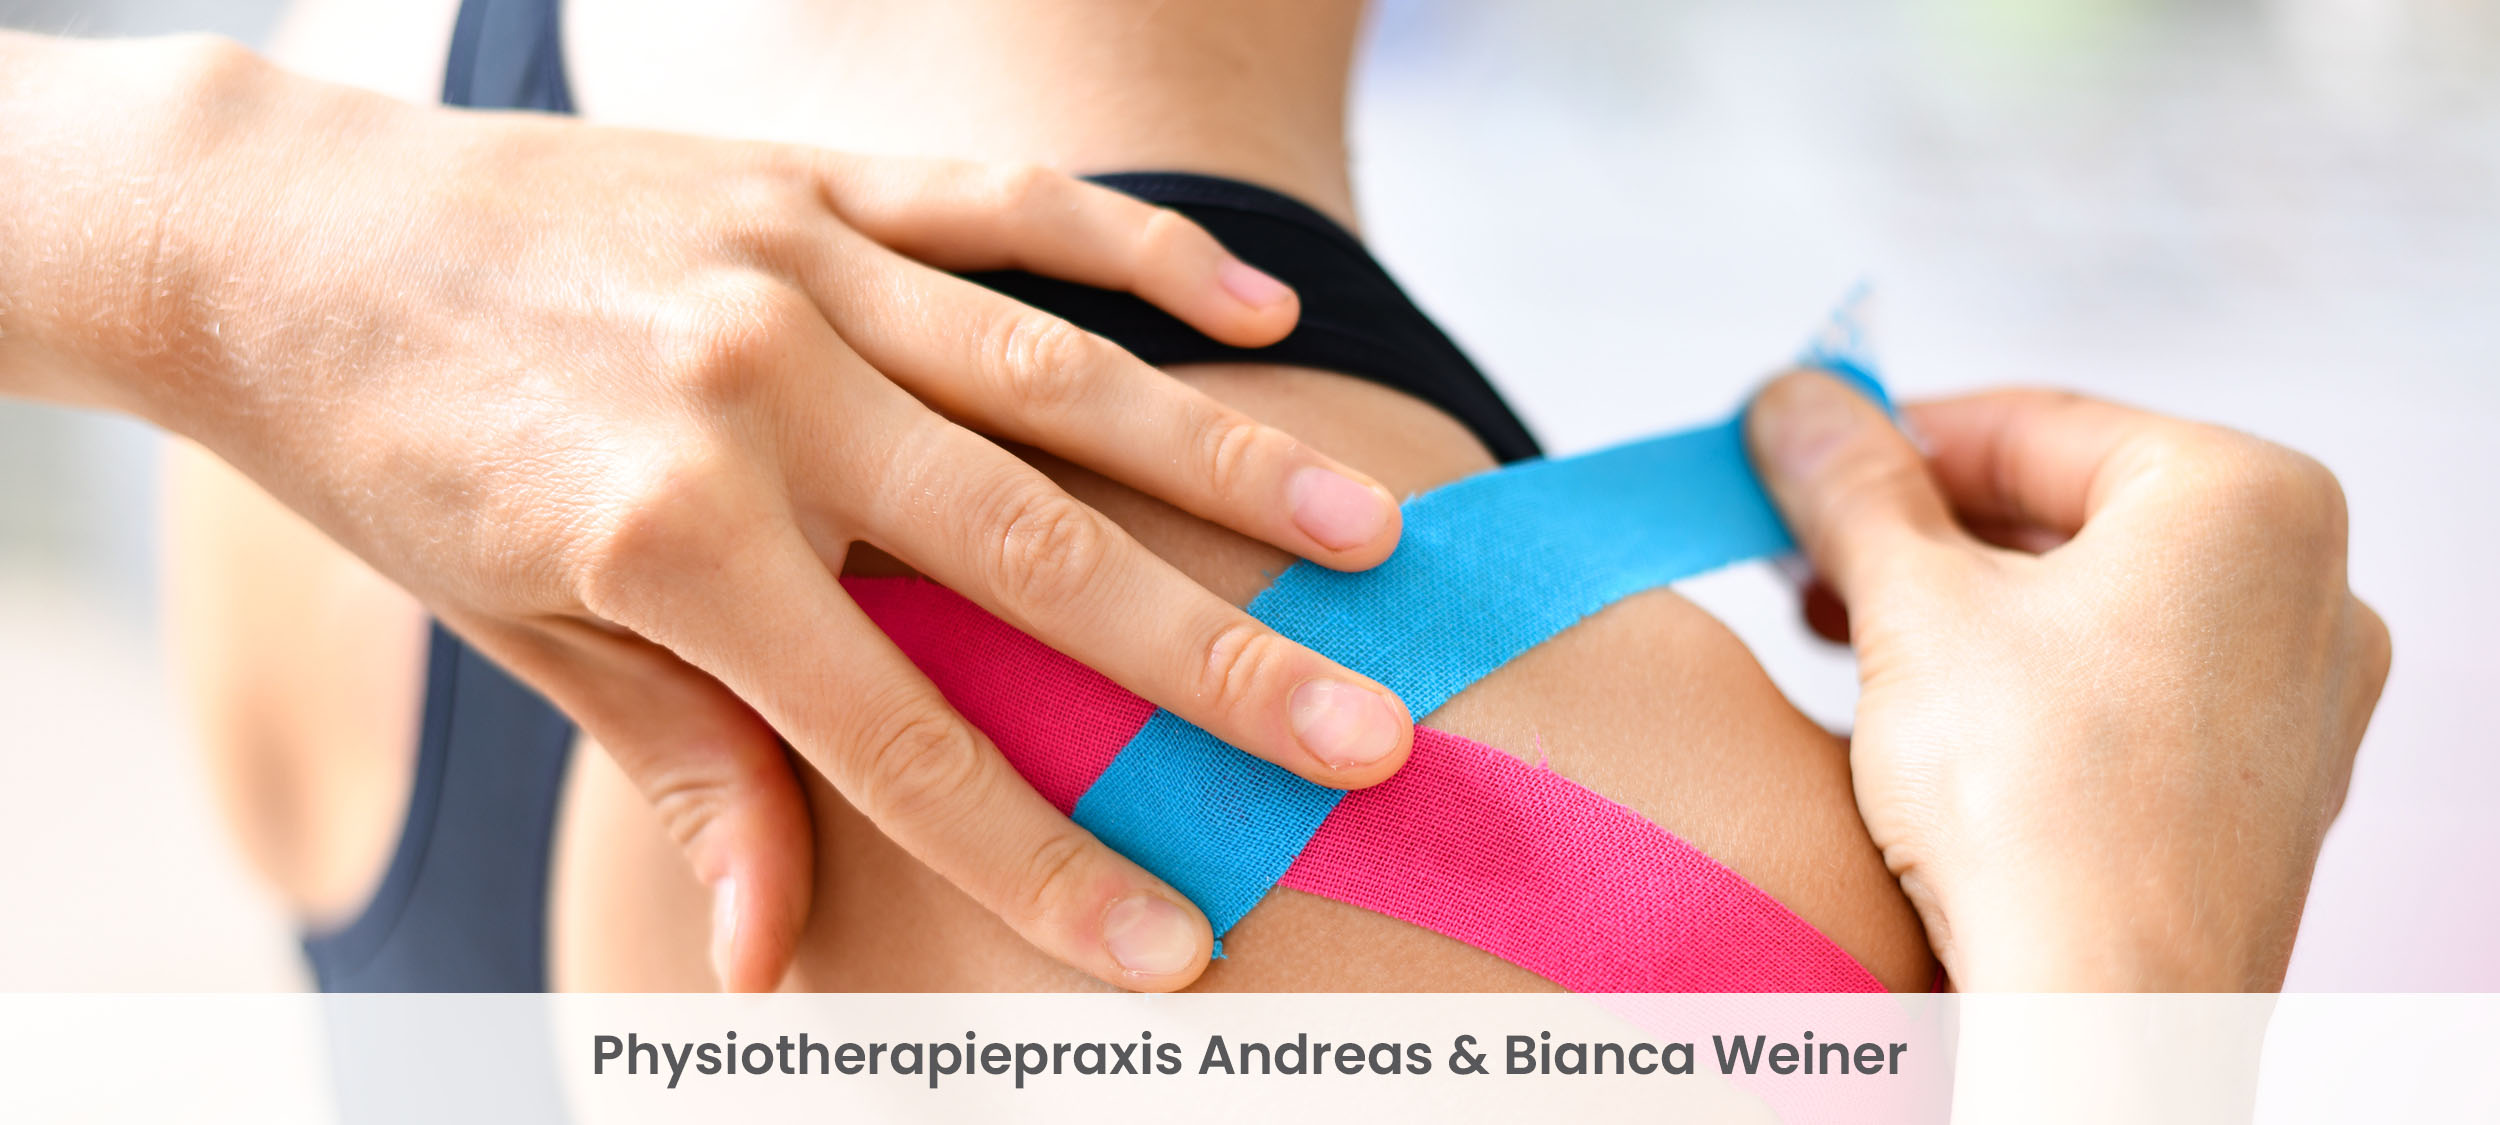 Physiotherapiepraxis Andreas & Bianca Weiner | Header 4